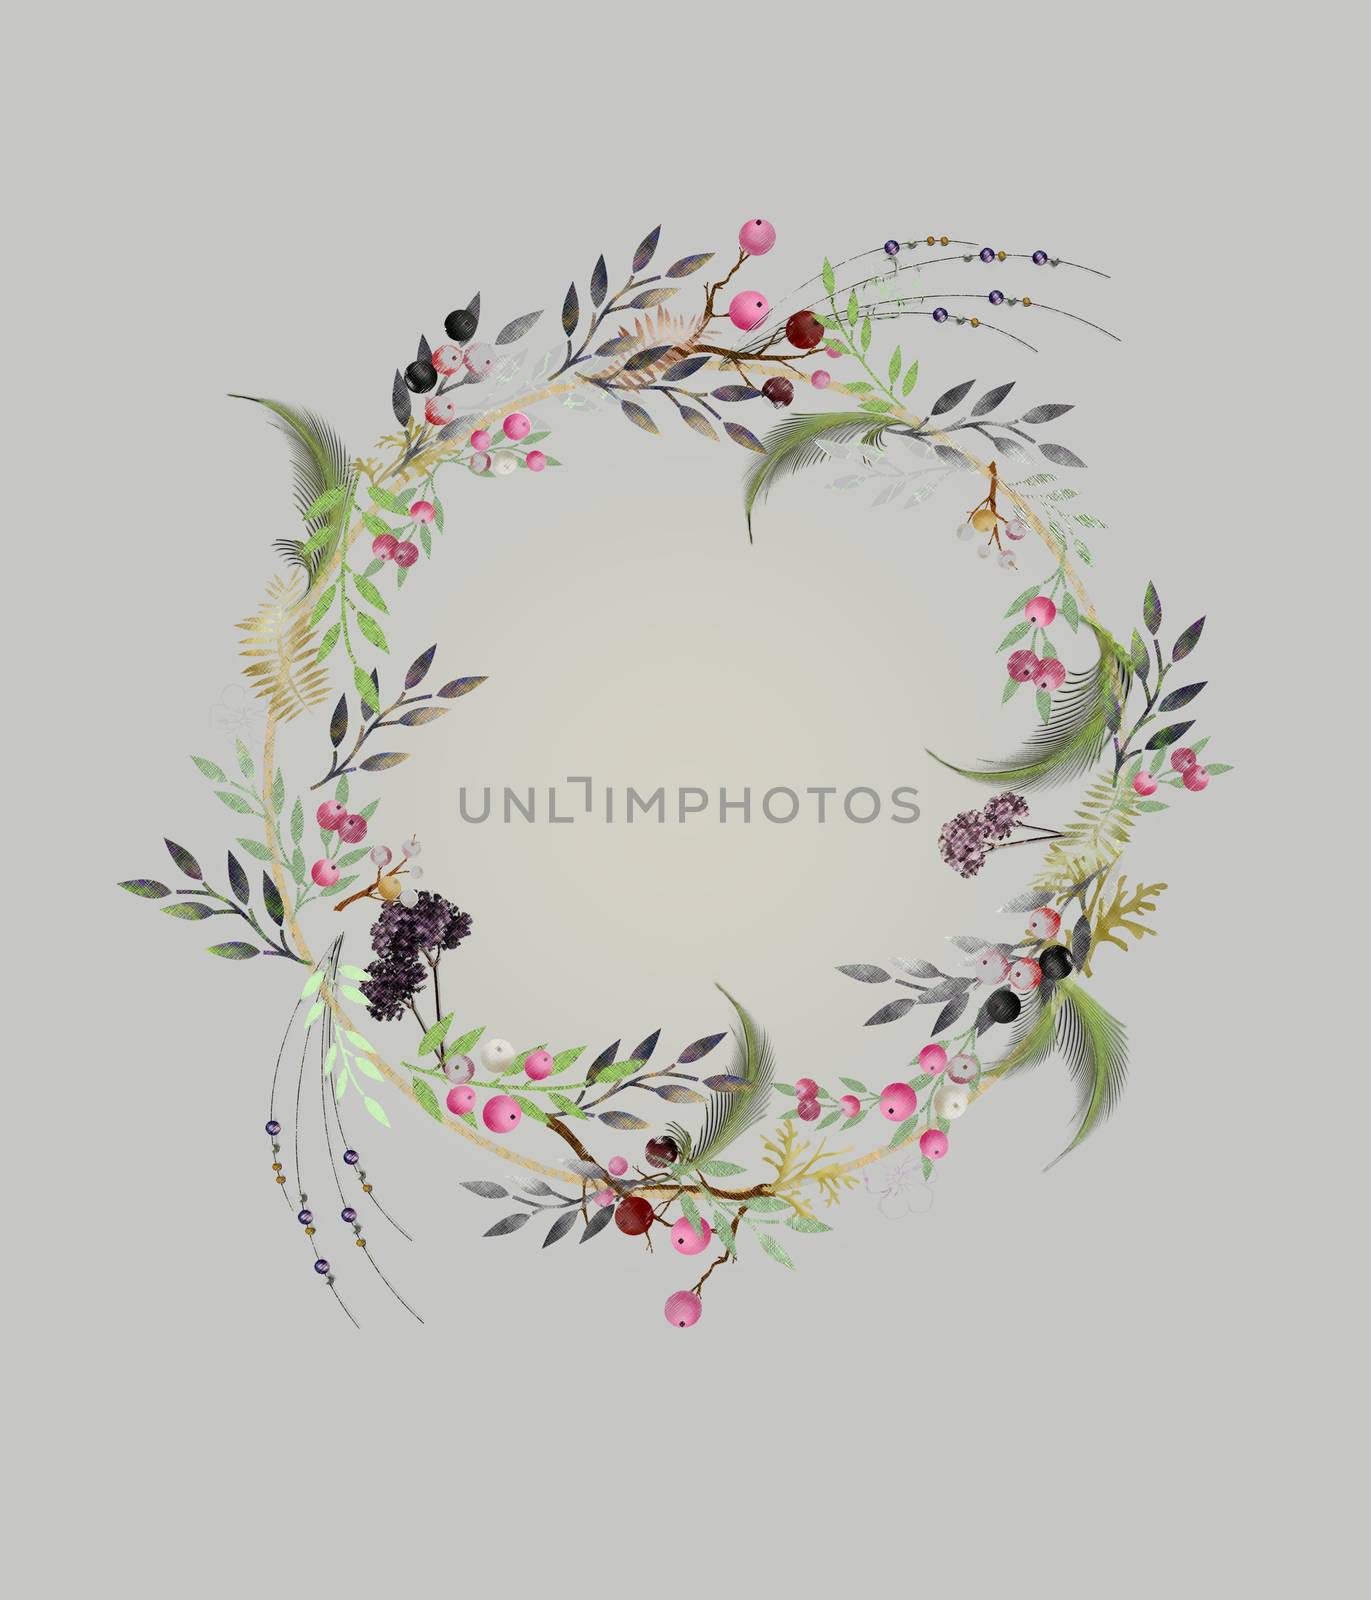 Minimalist Style Floral Arrangement. Vintage Wedding Decor. Botanical Illustration Isolated on pastel backgound.